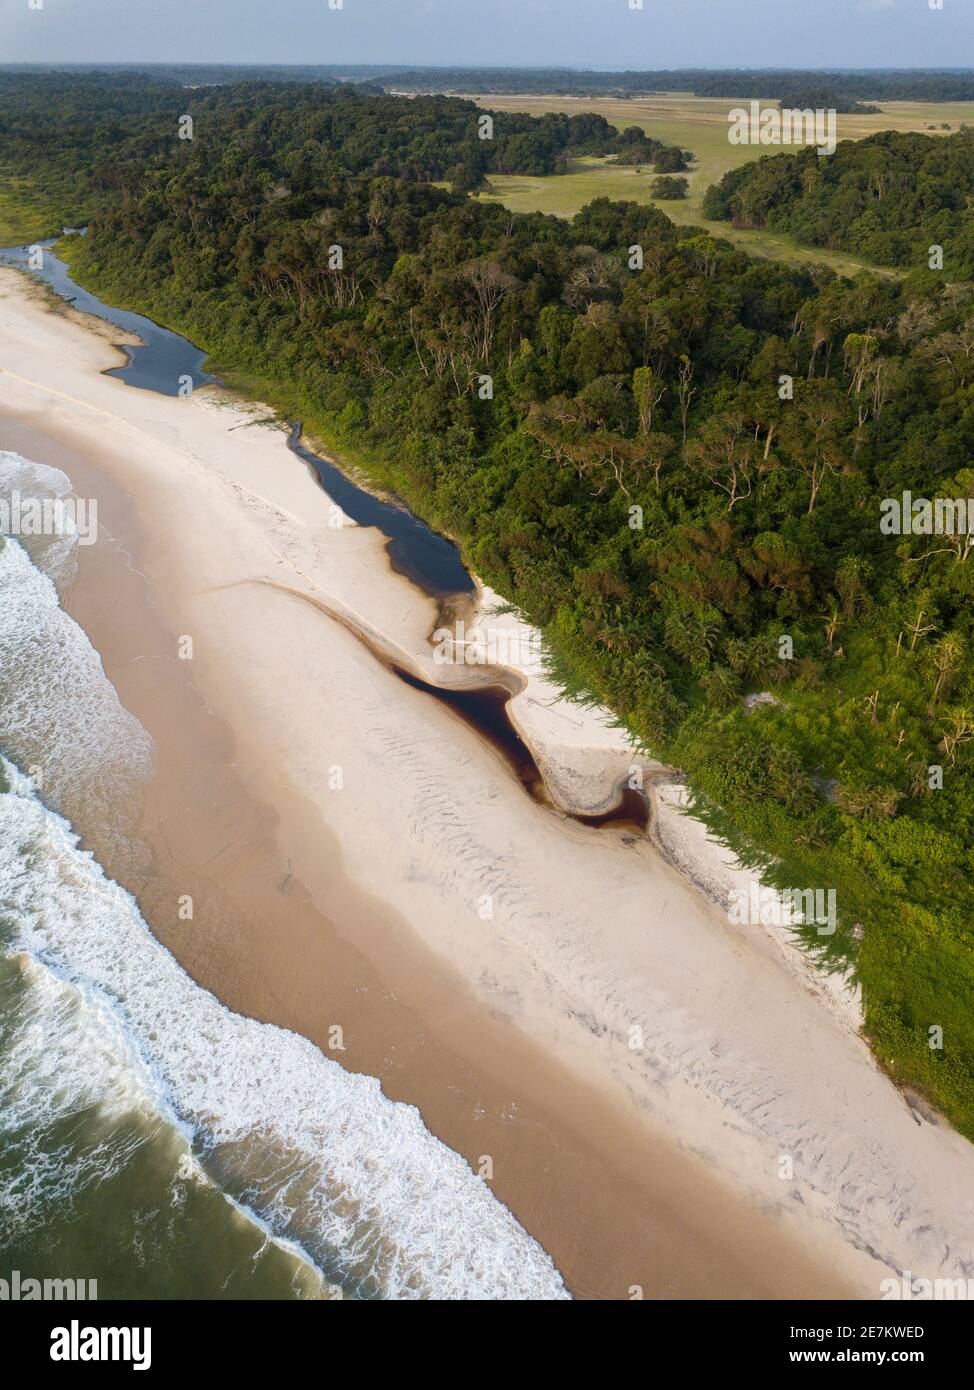 Playa y selva tropical, cerca de Omboue, Gabón, África central Foto de stock